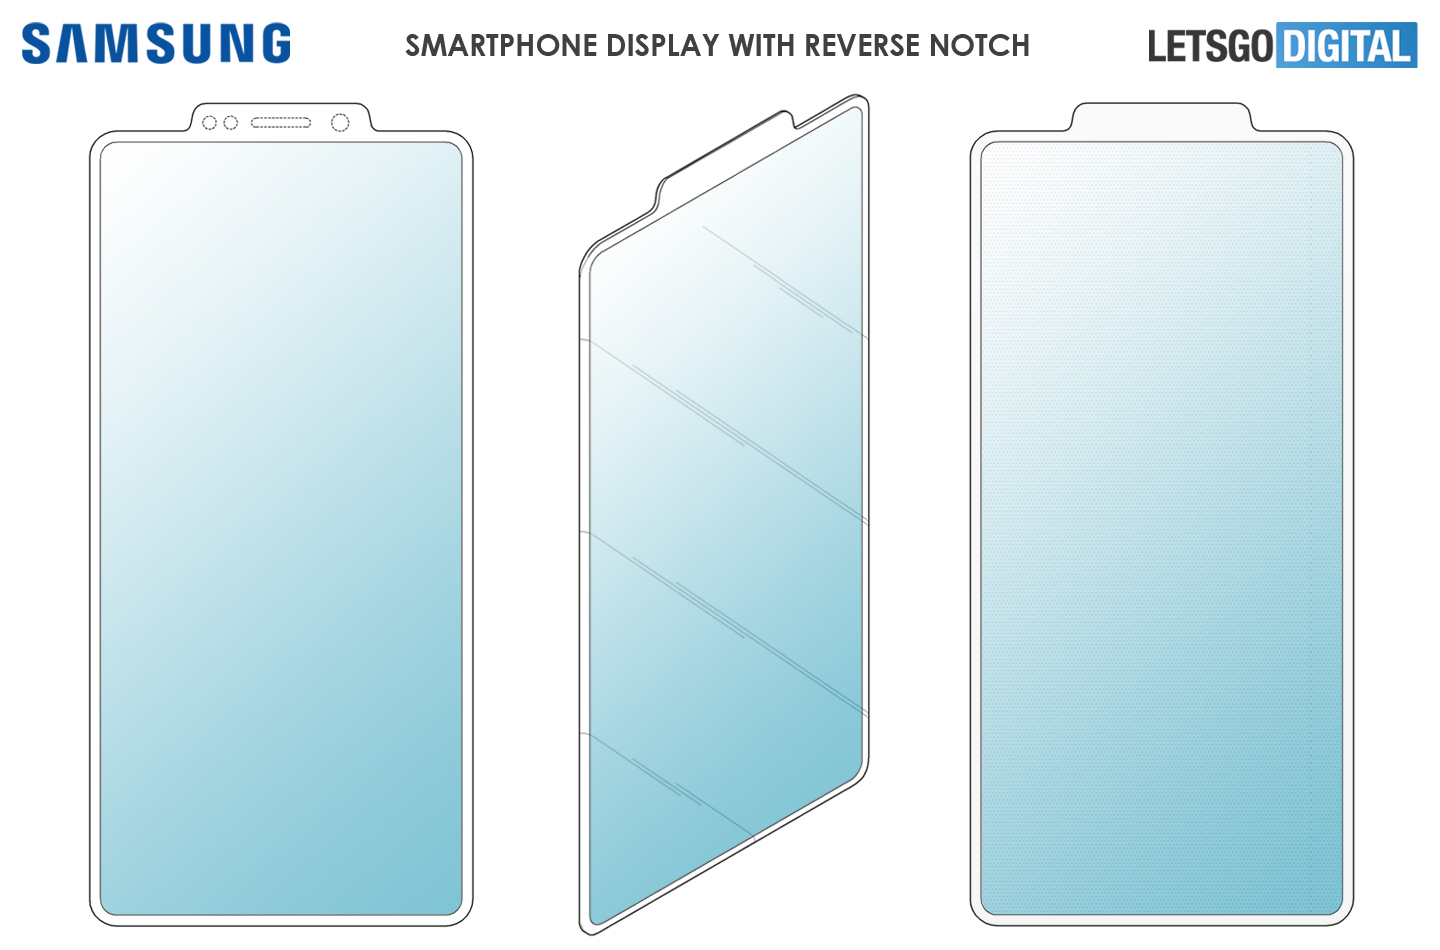 Samsung smartphone reverse notch